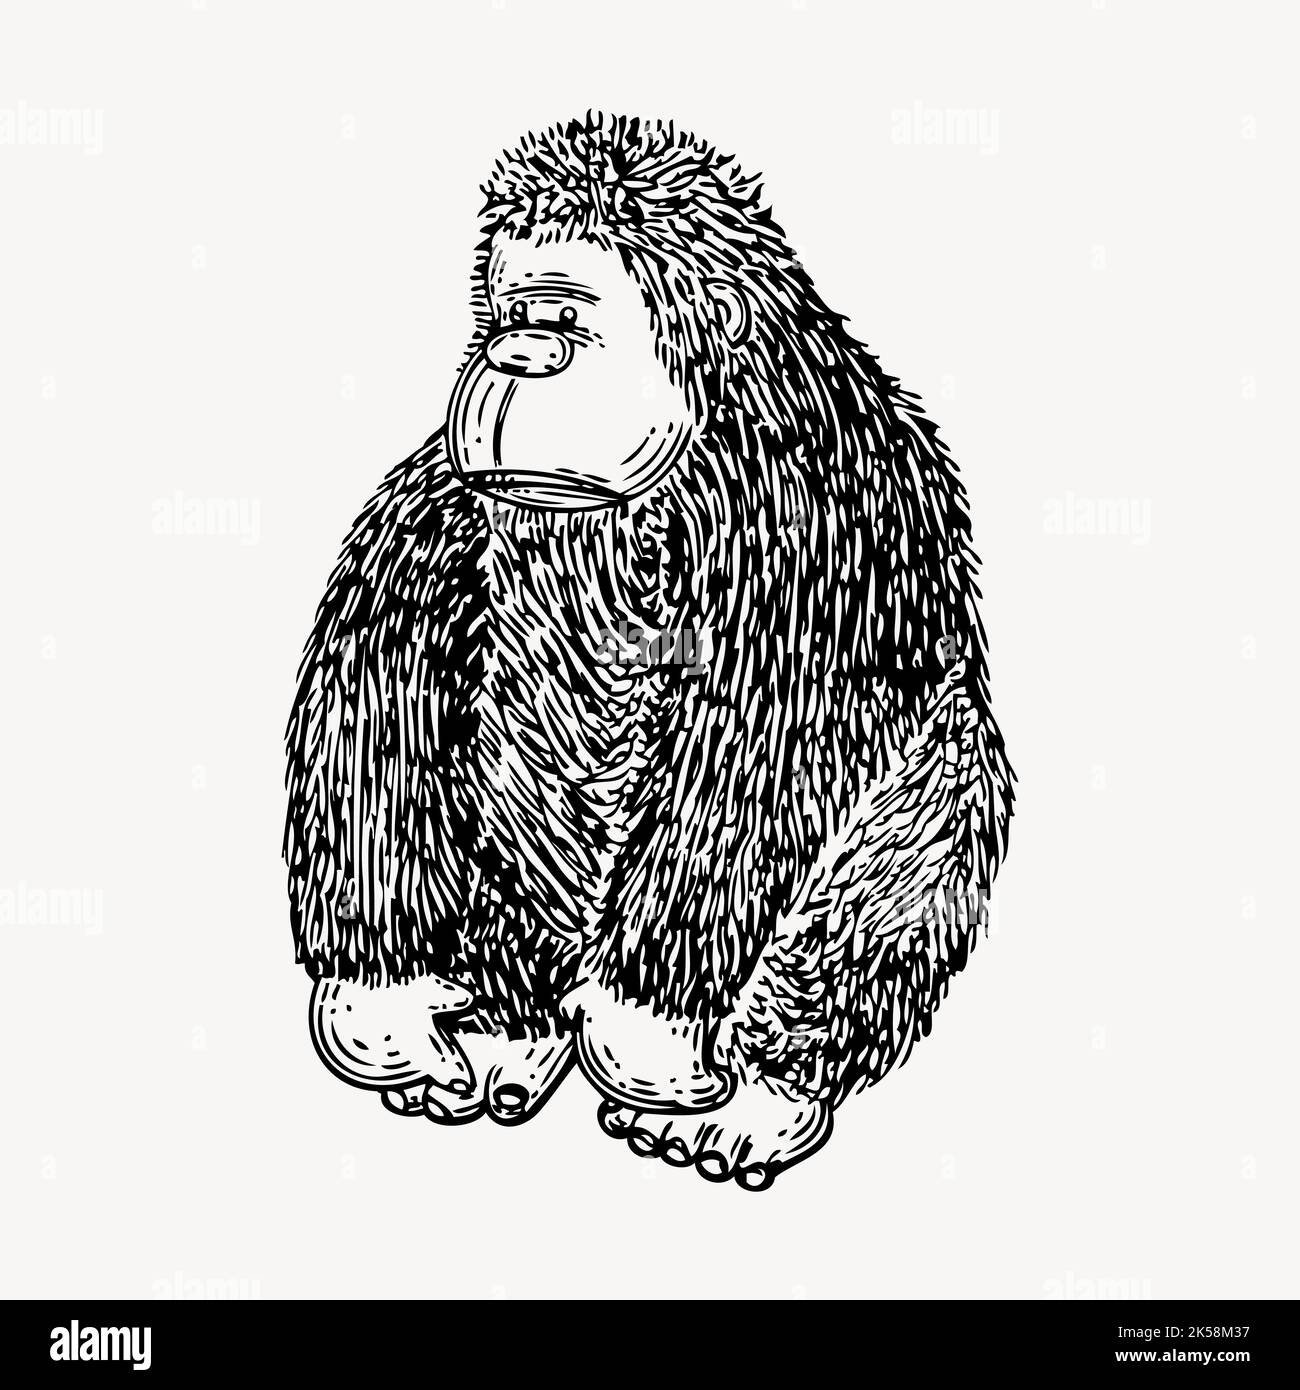 Gorilla drawing, vintage animal illustration vector. Stock Vector